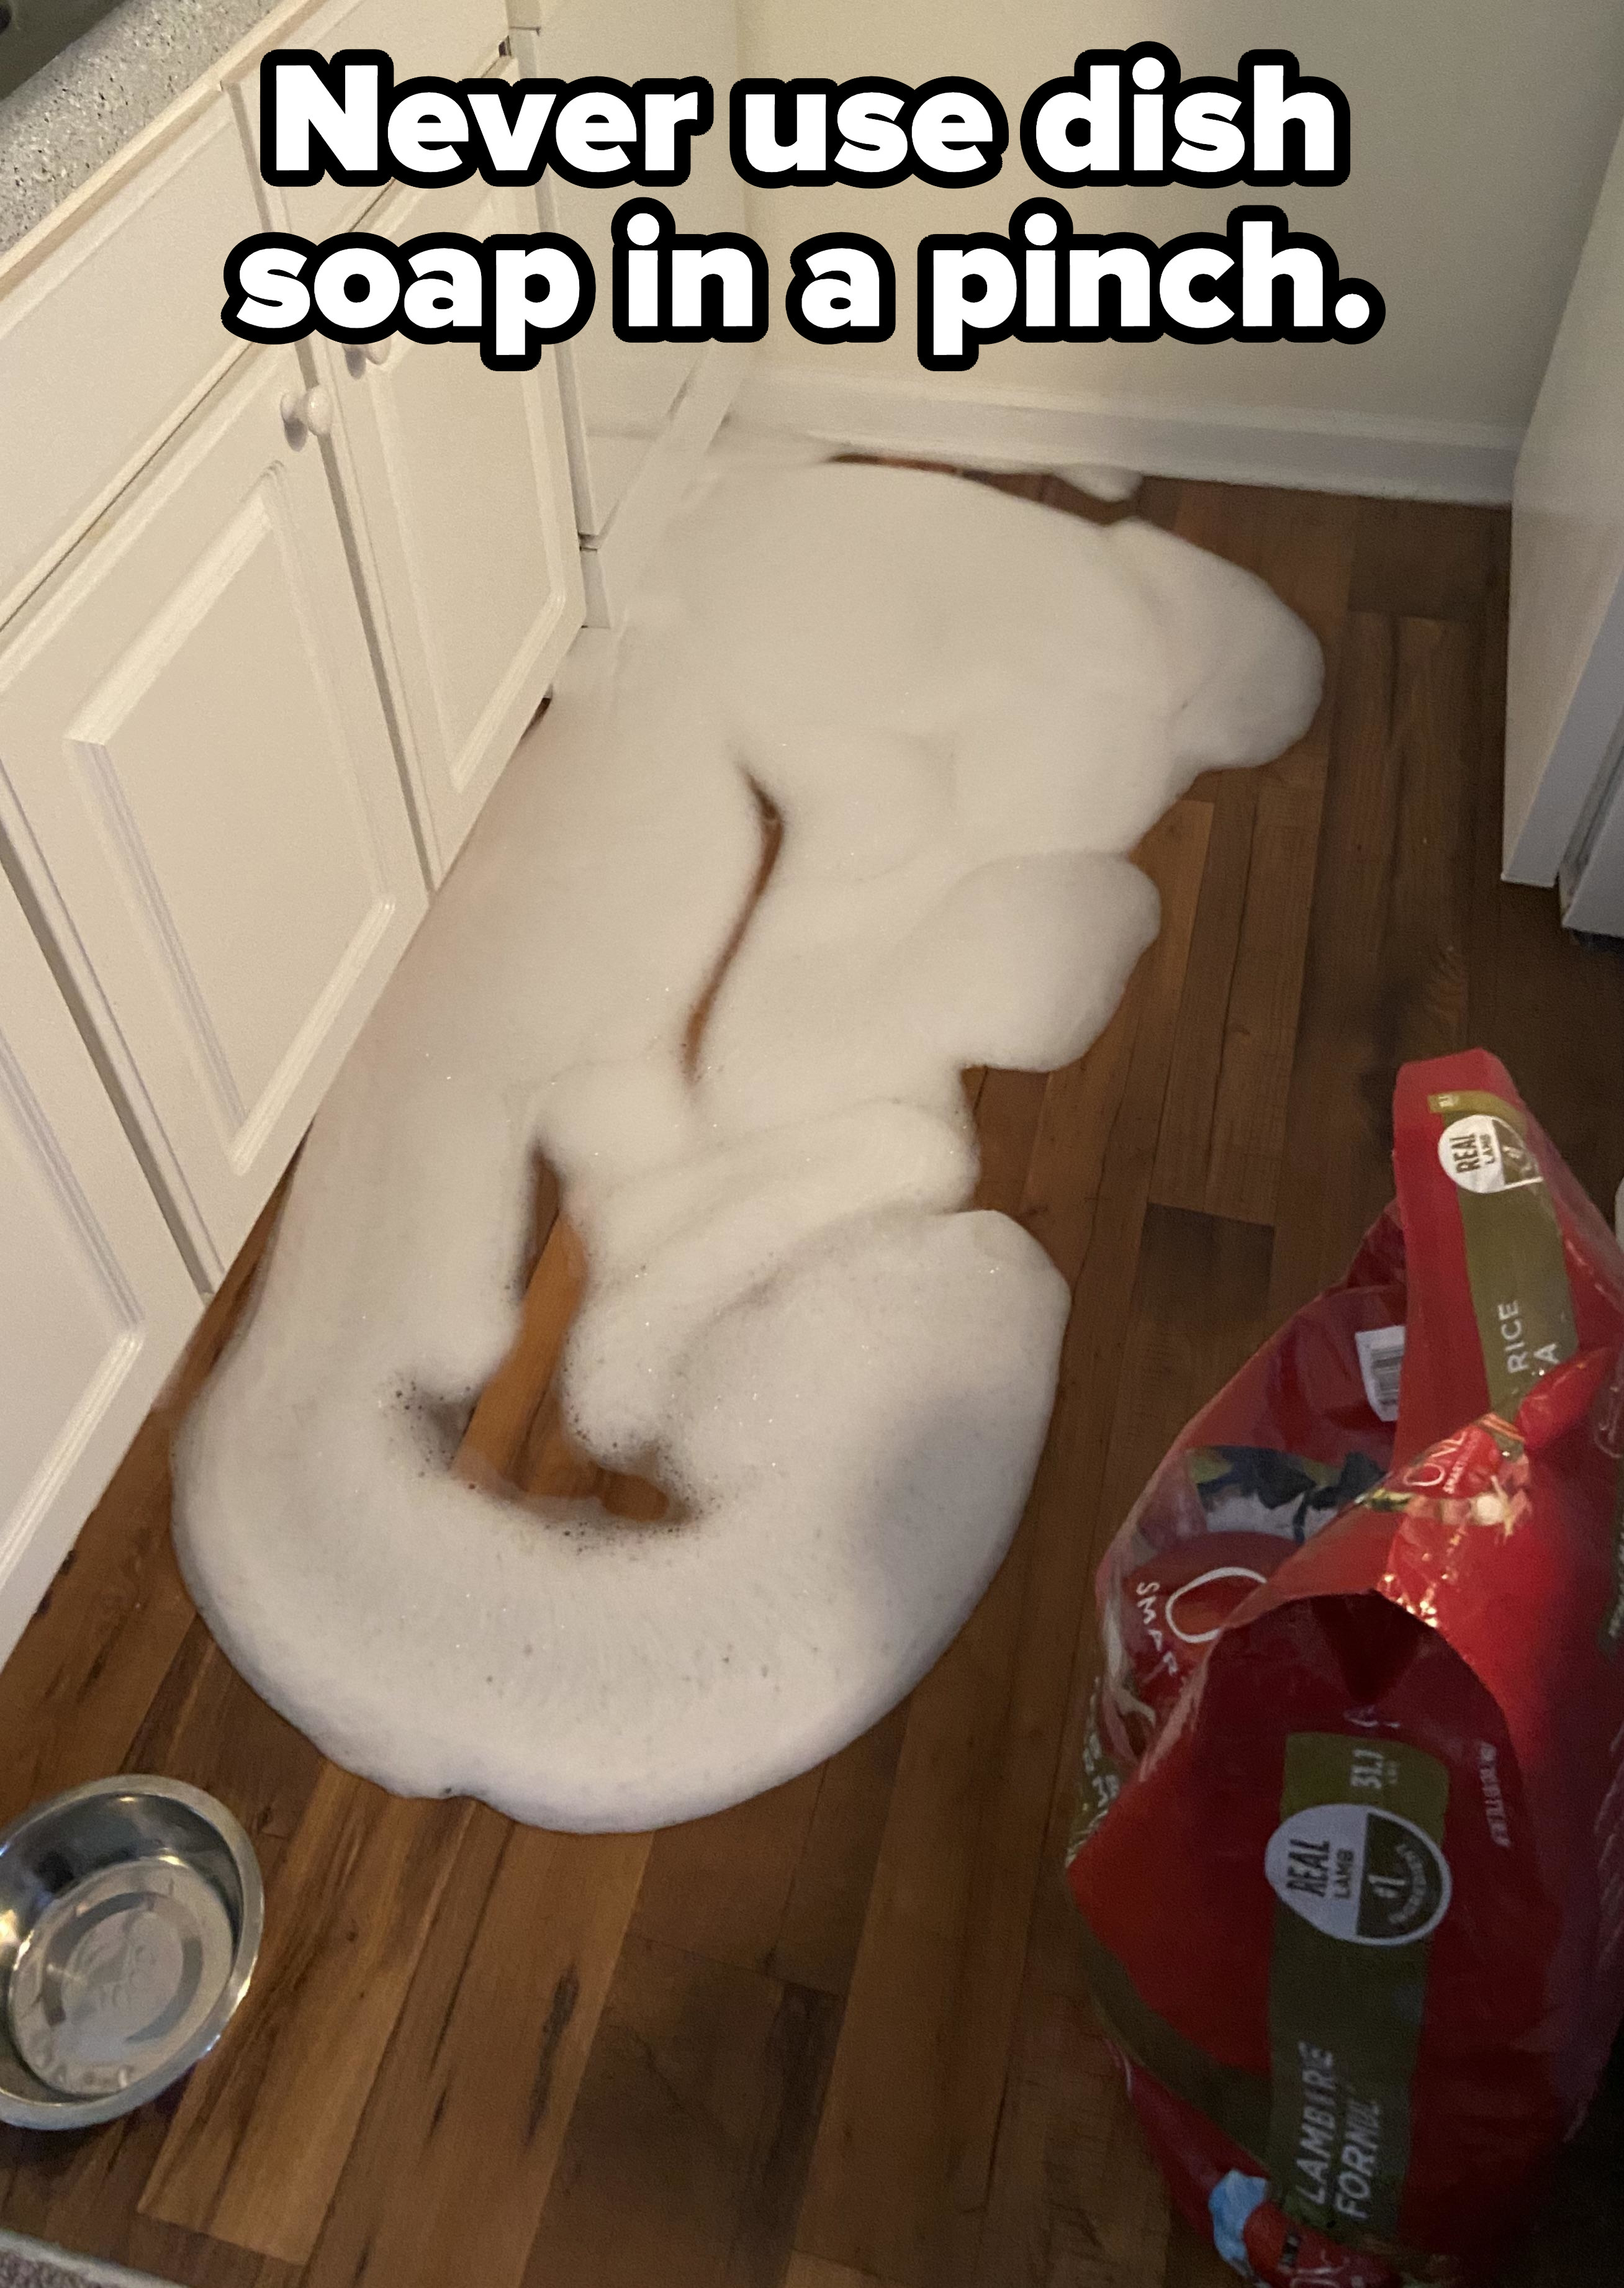 Foam on the floor